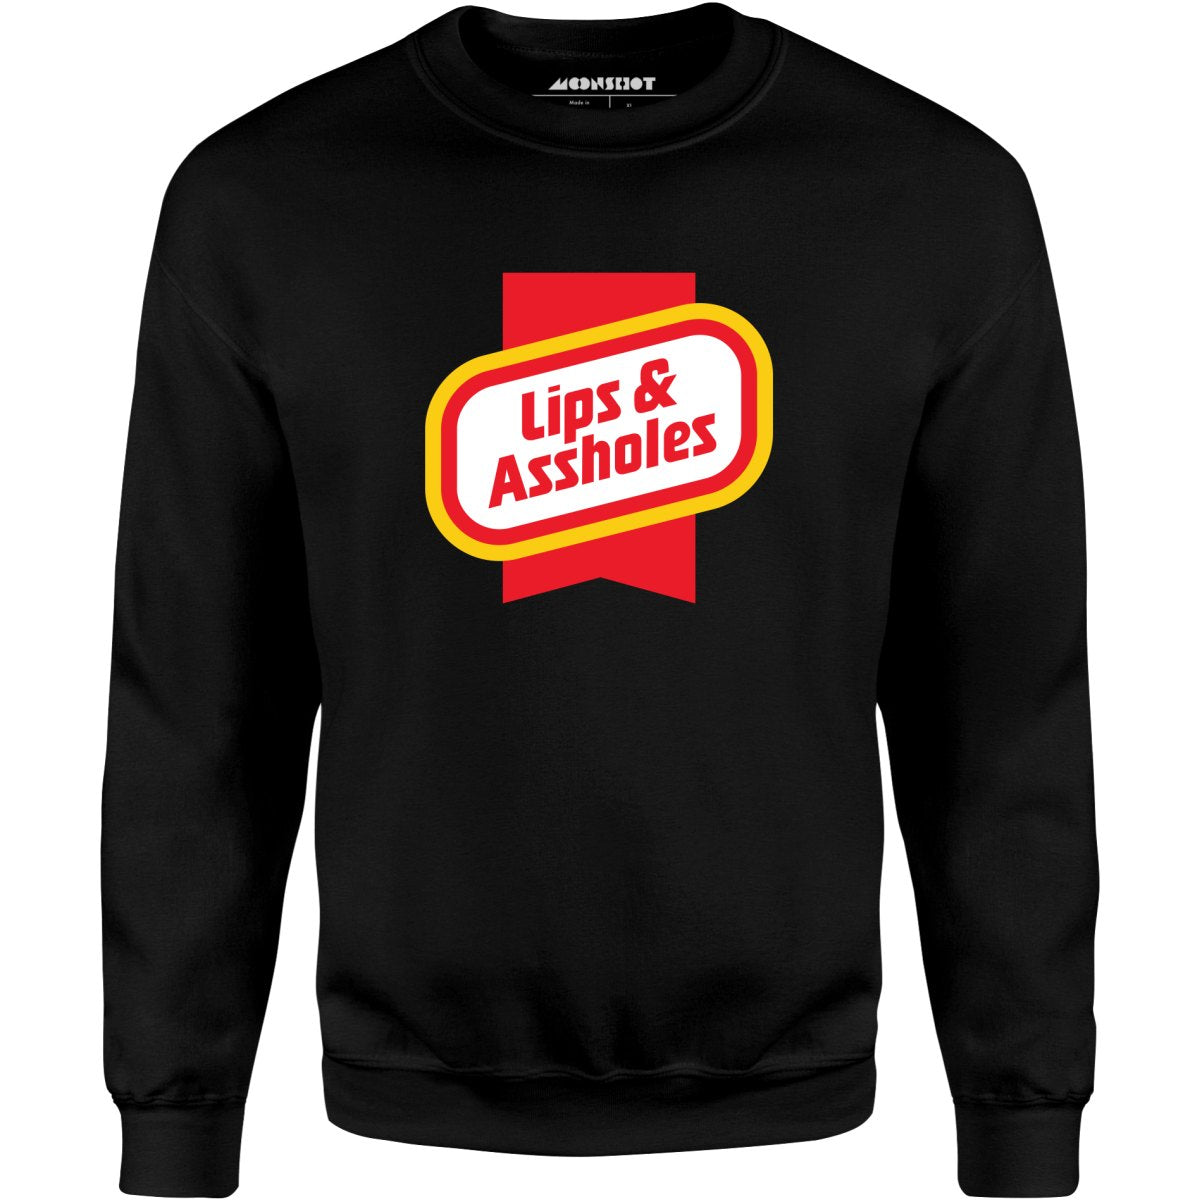 Lips & Assholes - Unisex Sweatshirt